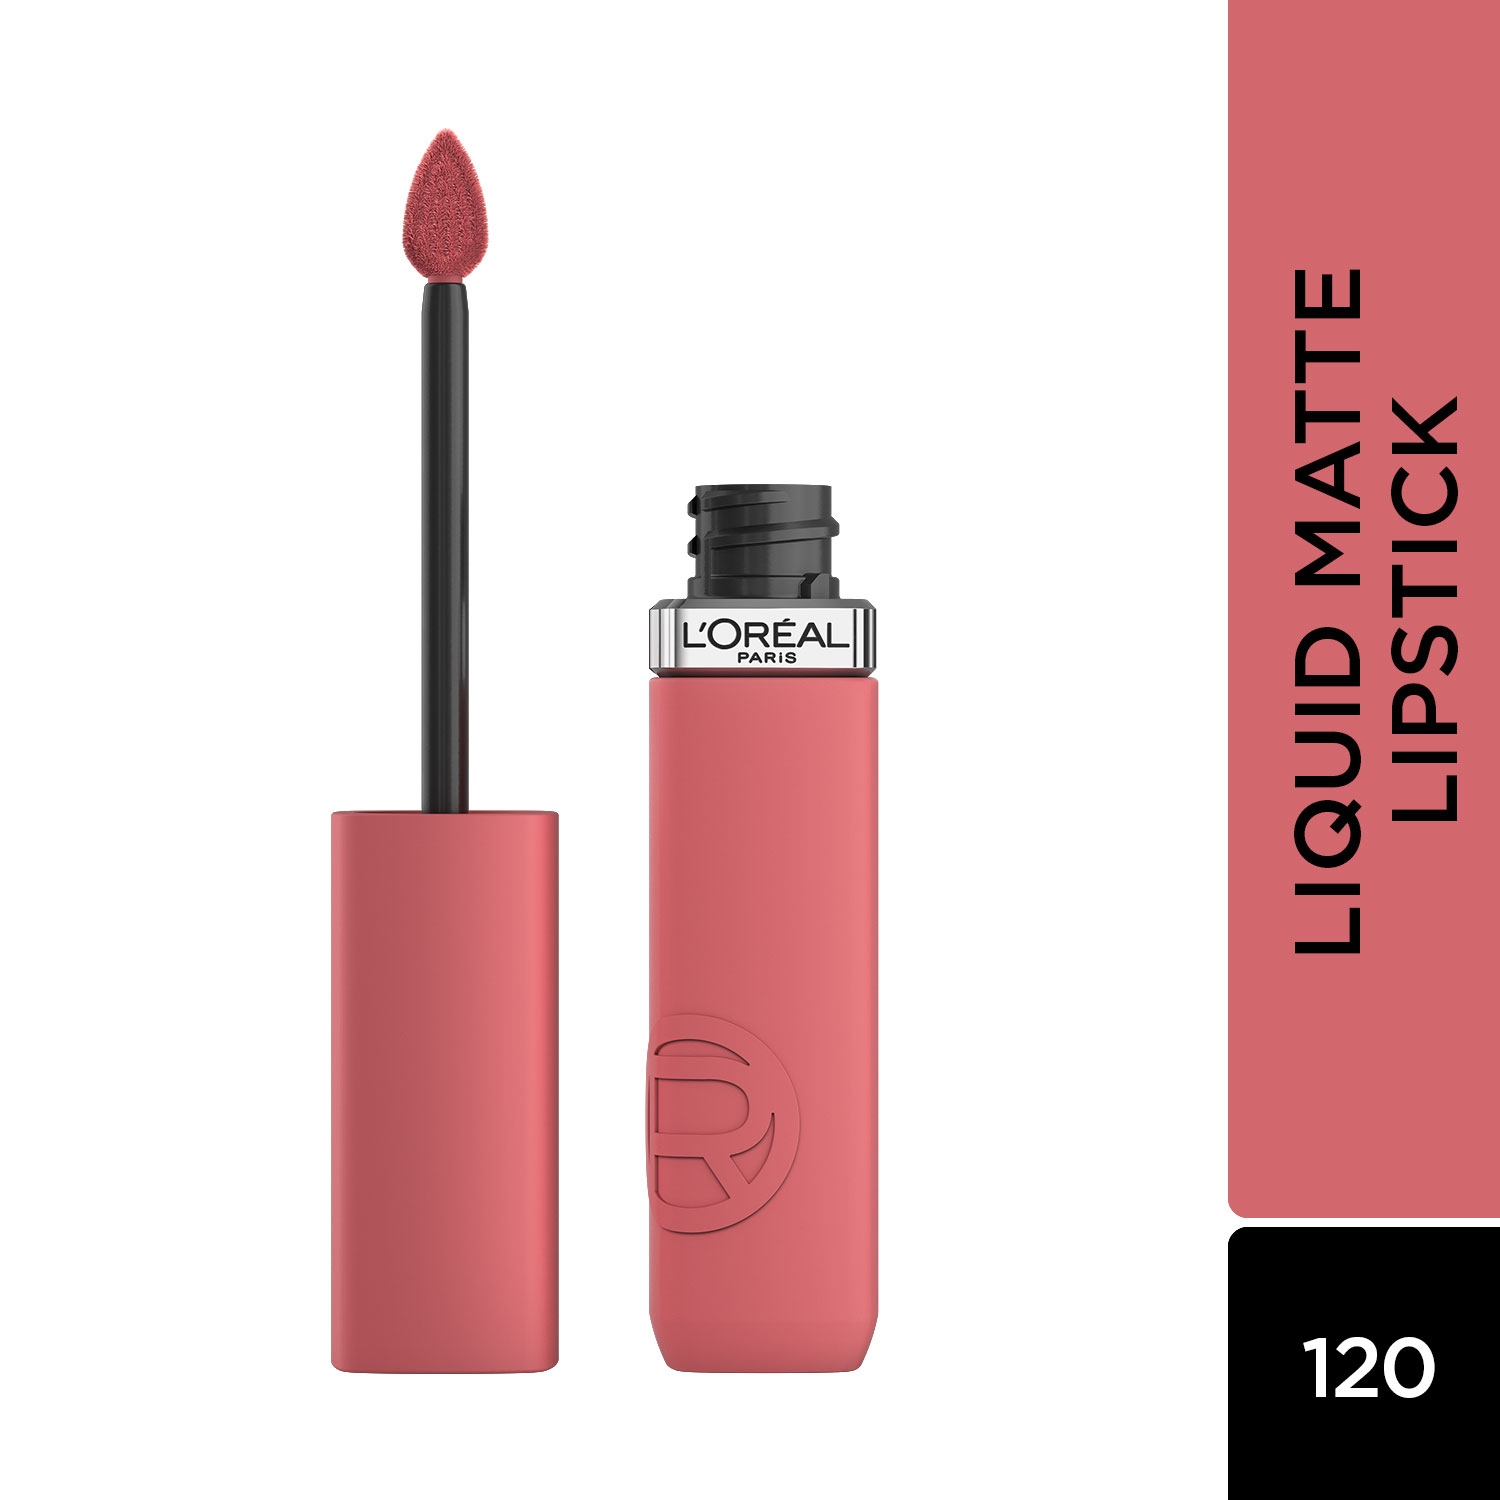 L'Oreal Paris | L'Oreal Paris Infallible Matte Resistance Liquid Lipstick - 120 Major Crush (5ml)